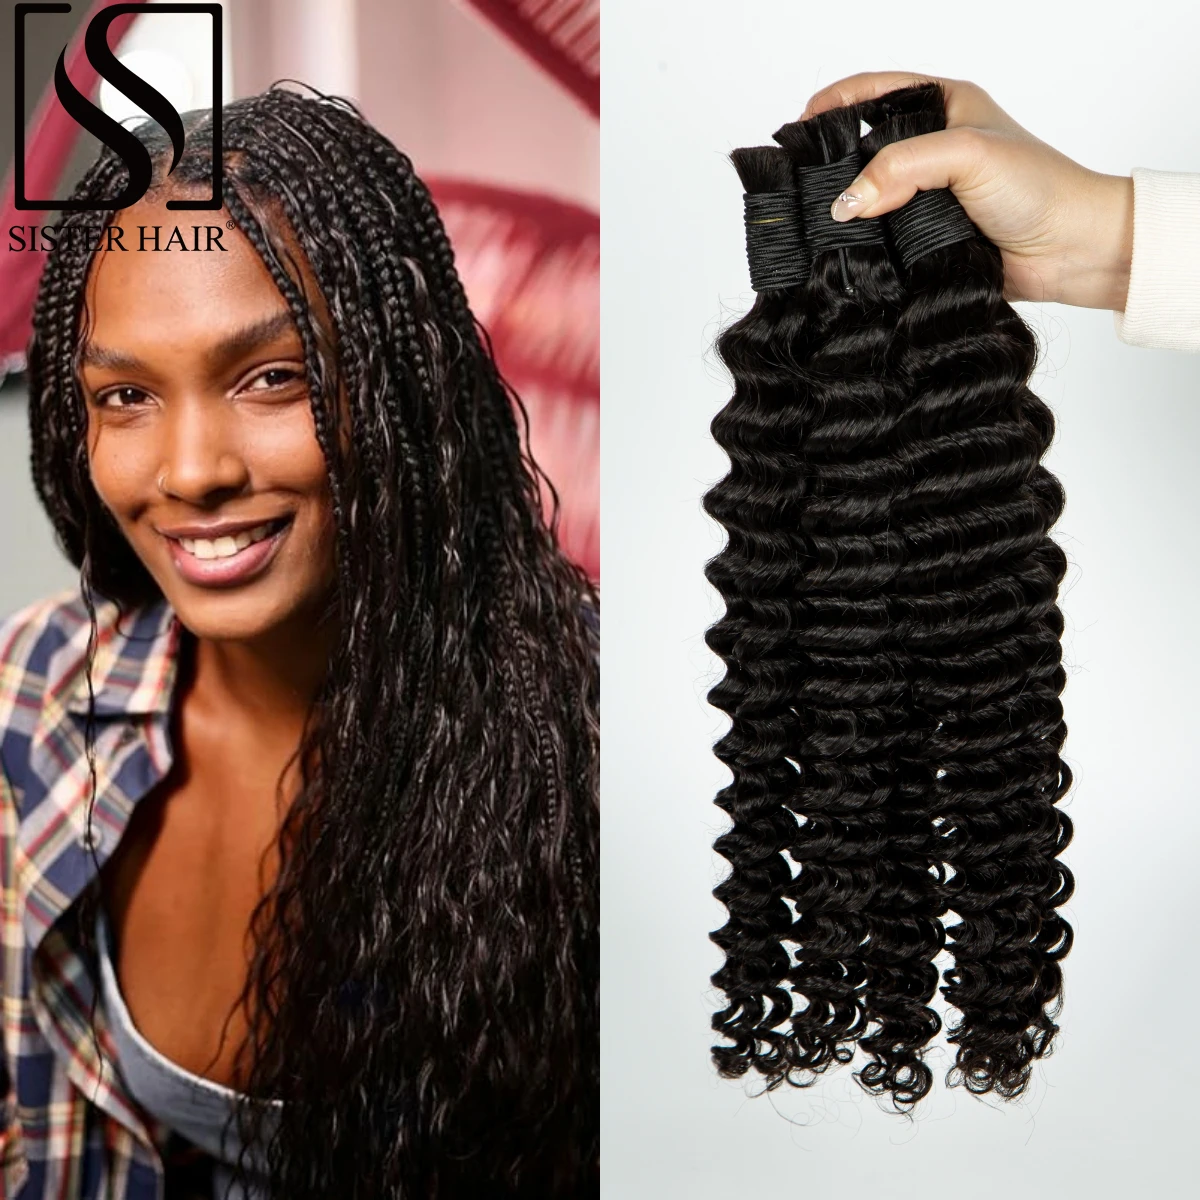 

26 28 Inch 100% Virgin Human Hair Bulk for Boho Braiding Natural No Weft Brazilian Remy Hair Bulk Deep Wave Curly Braided Bundle